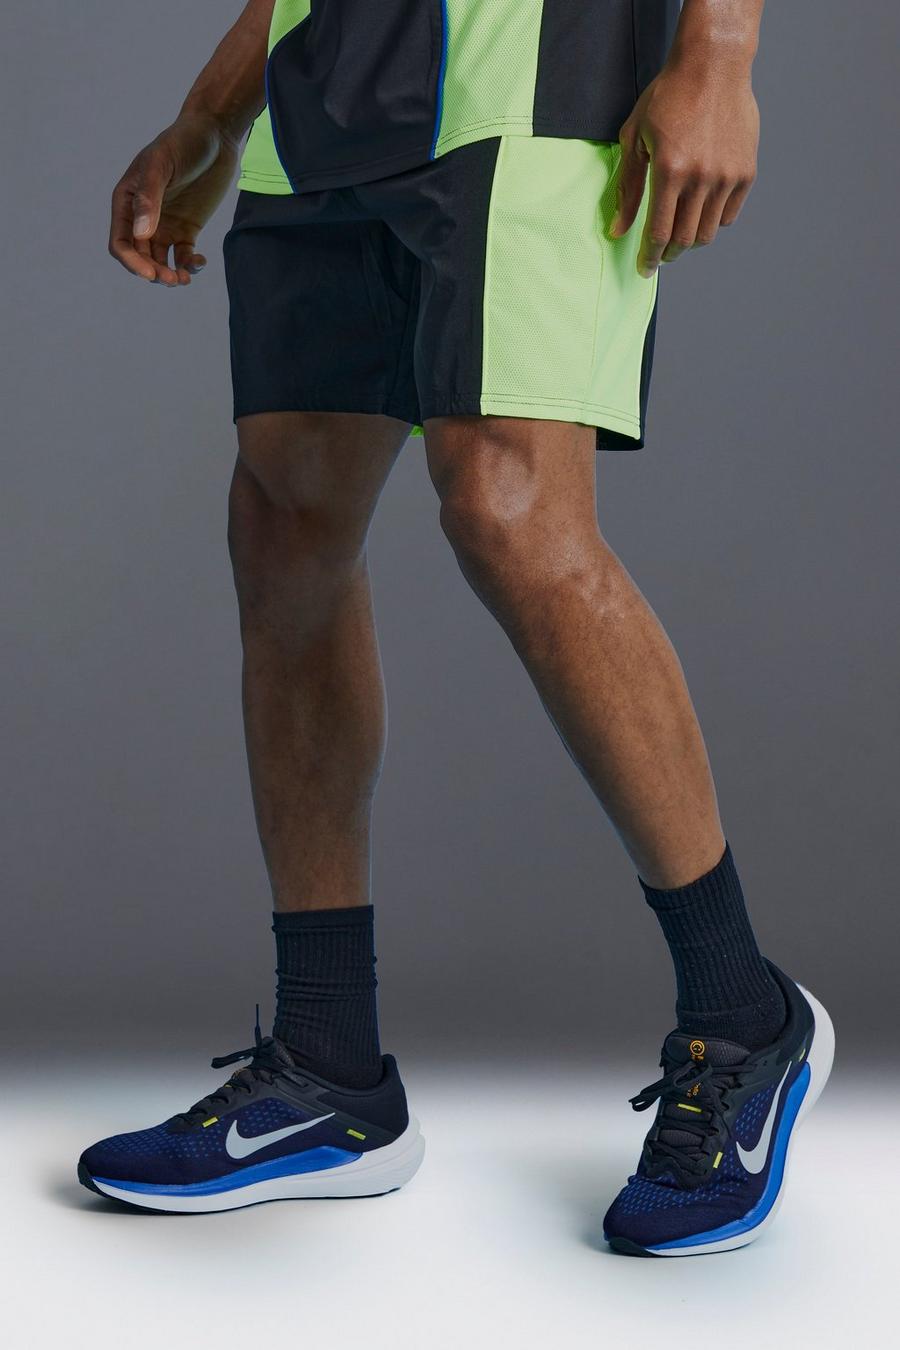 Man Active Colorblock Shorts, Black image number 1